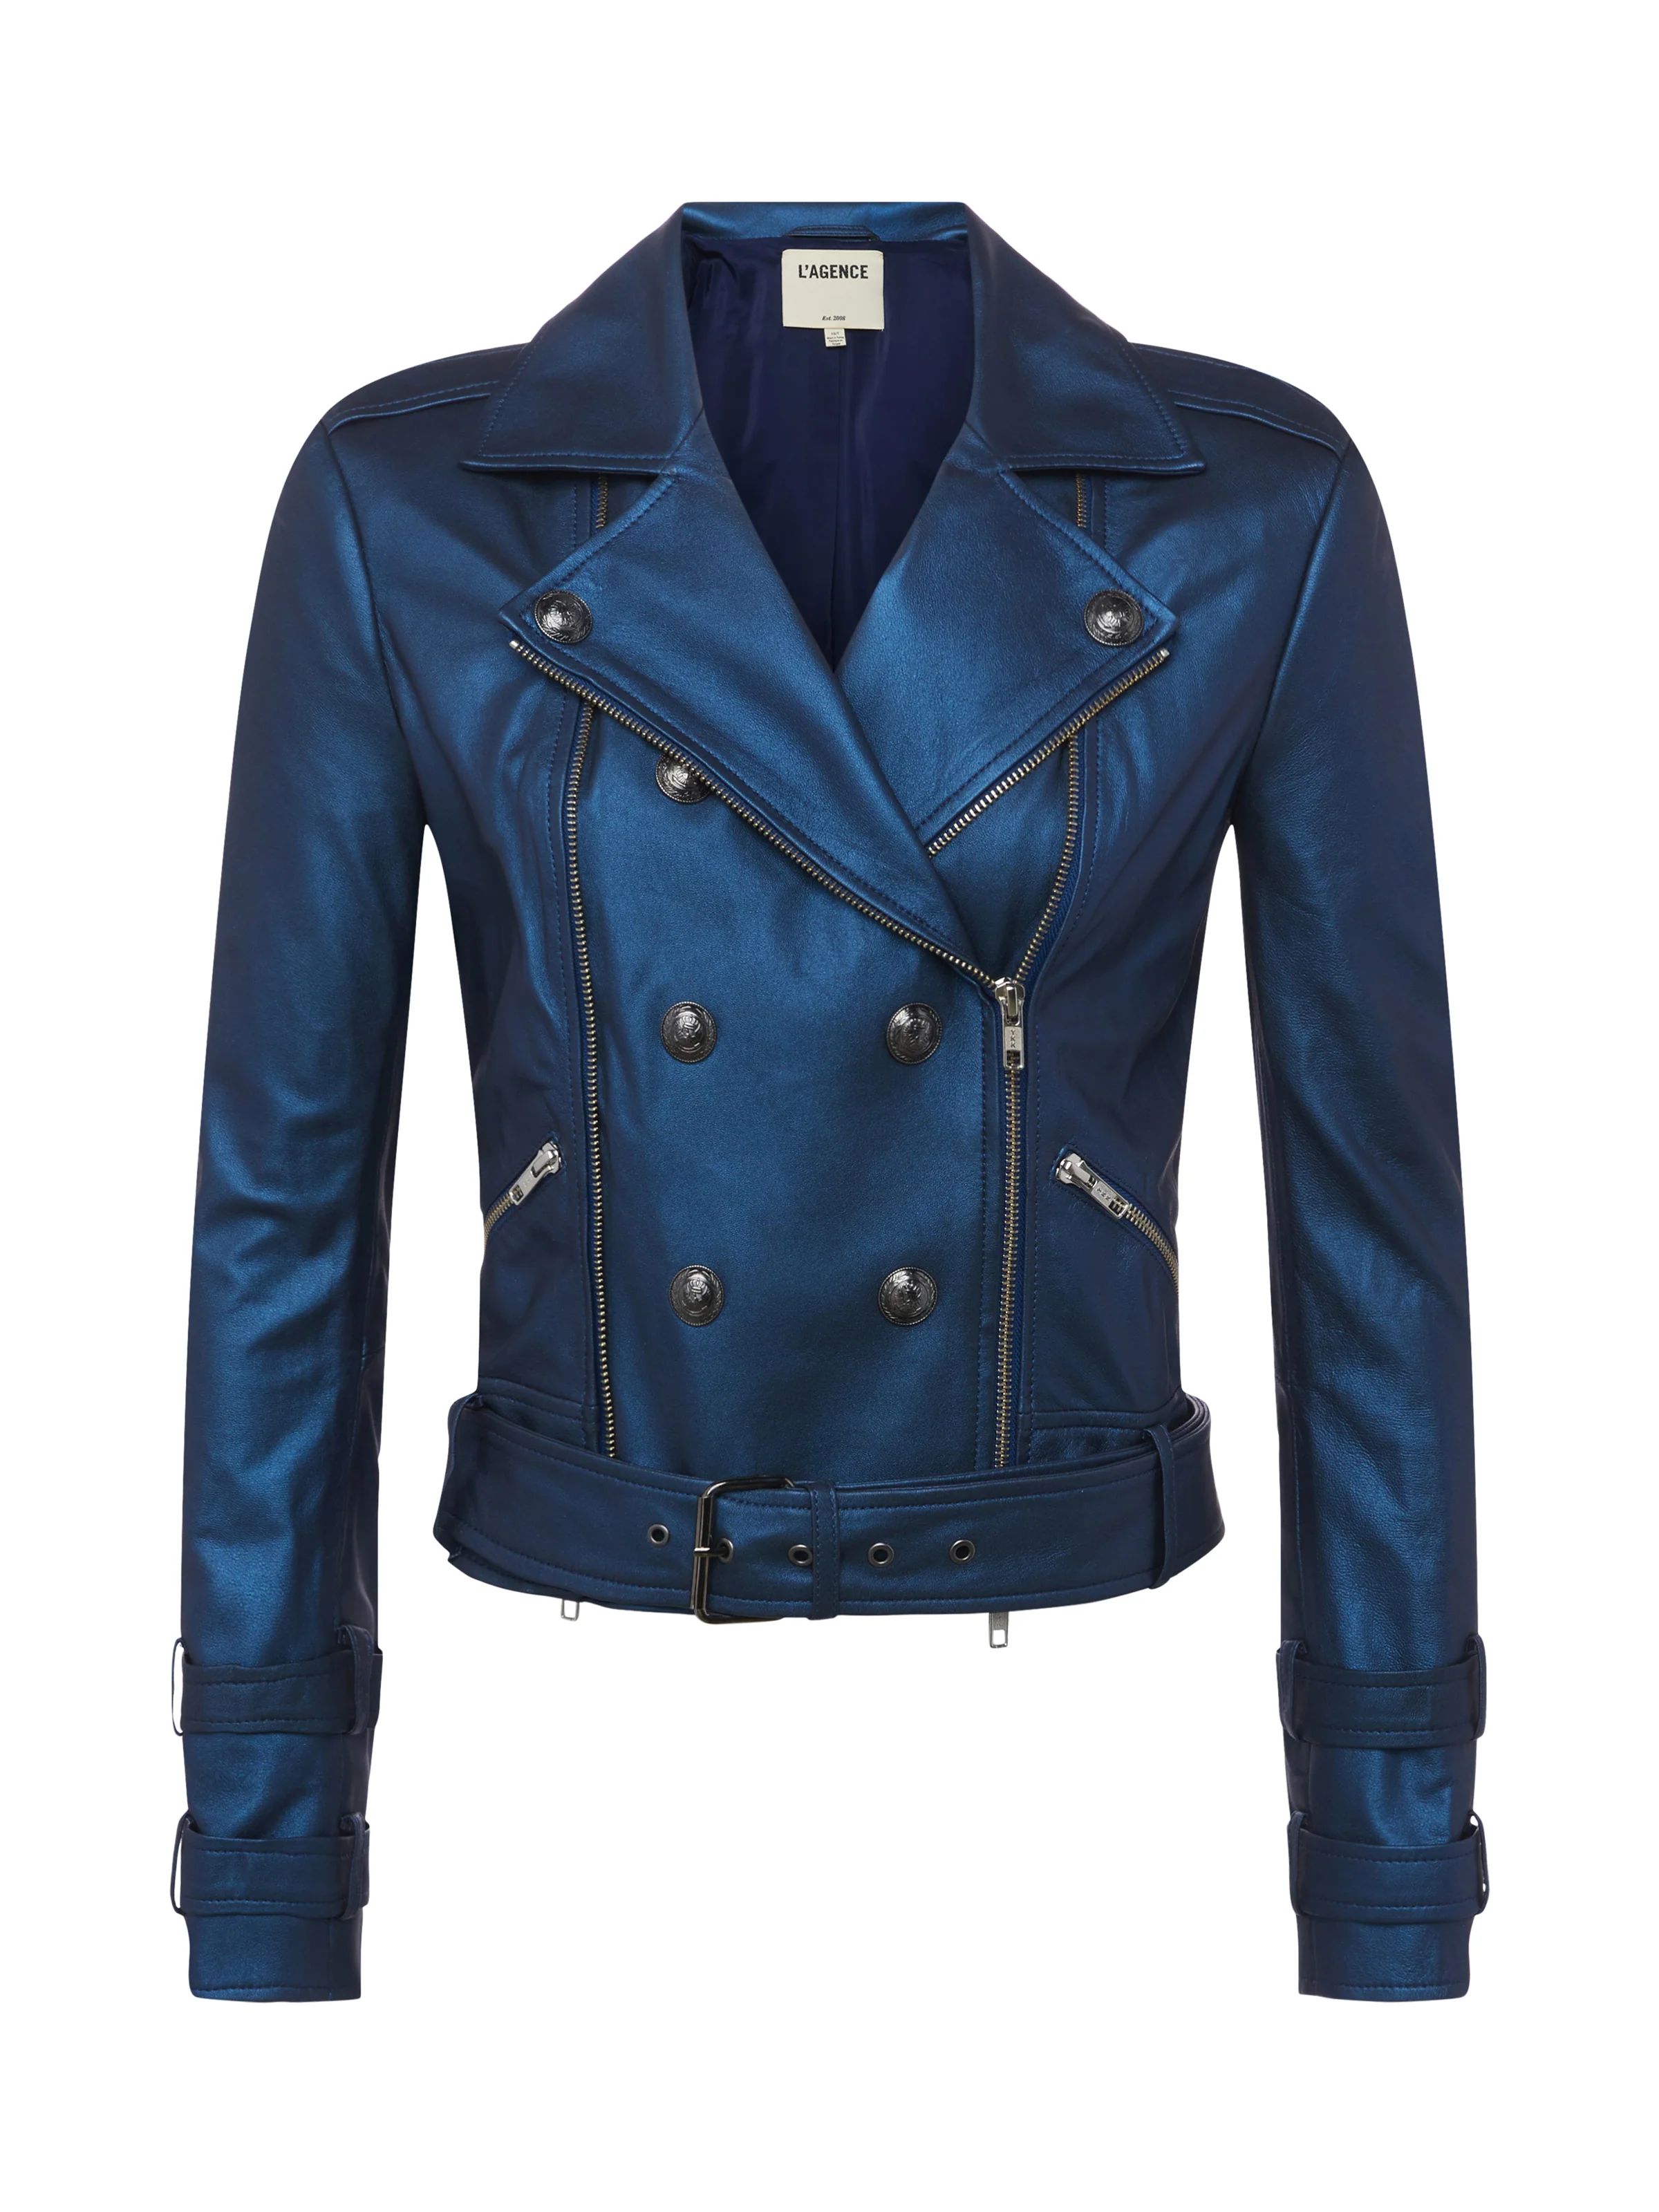 L'AGENCE Billie Belted Leather Jacket In Blue Metallic | L'Agence